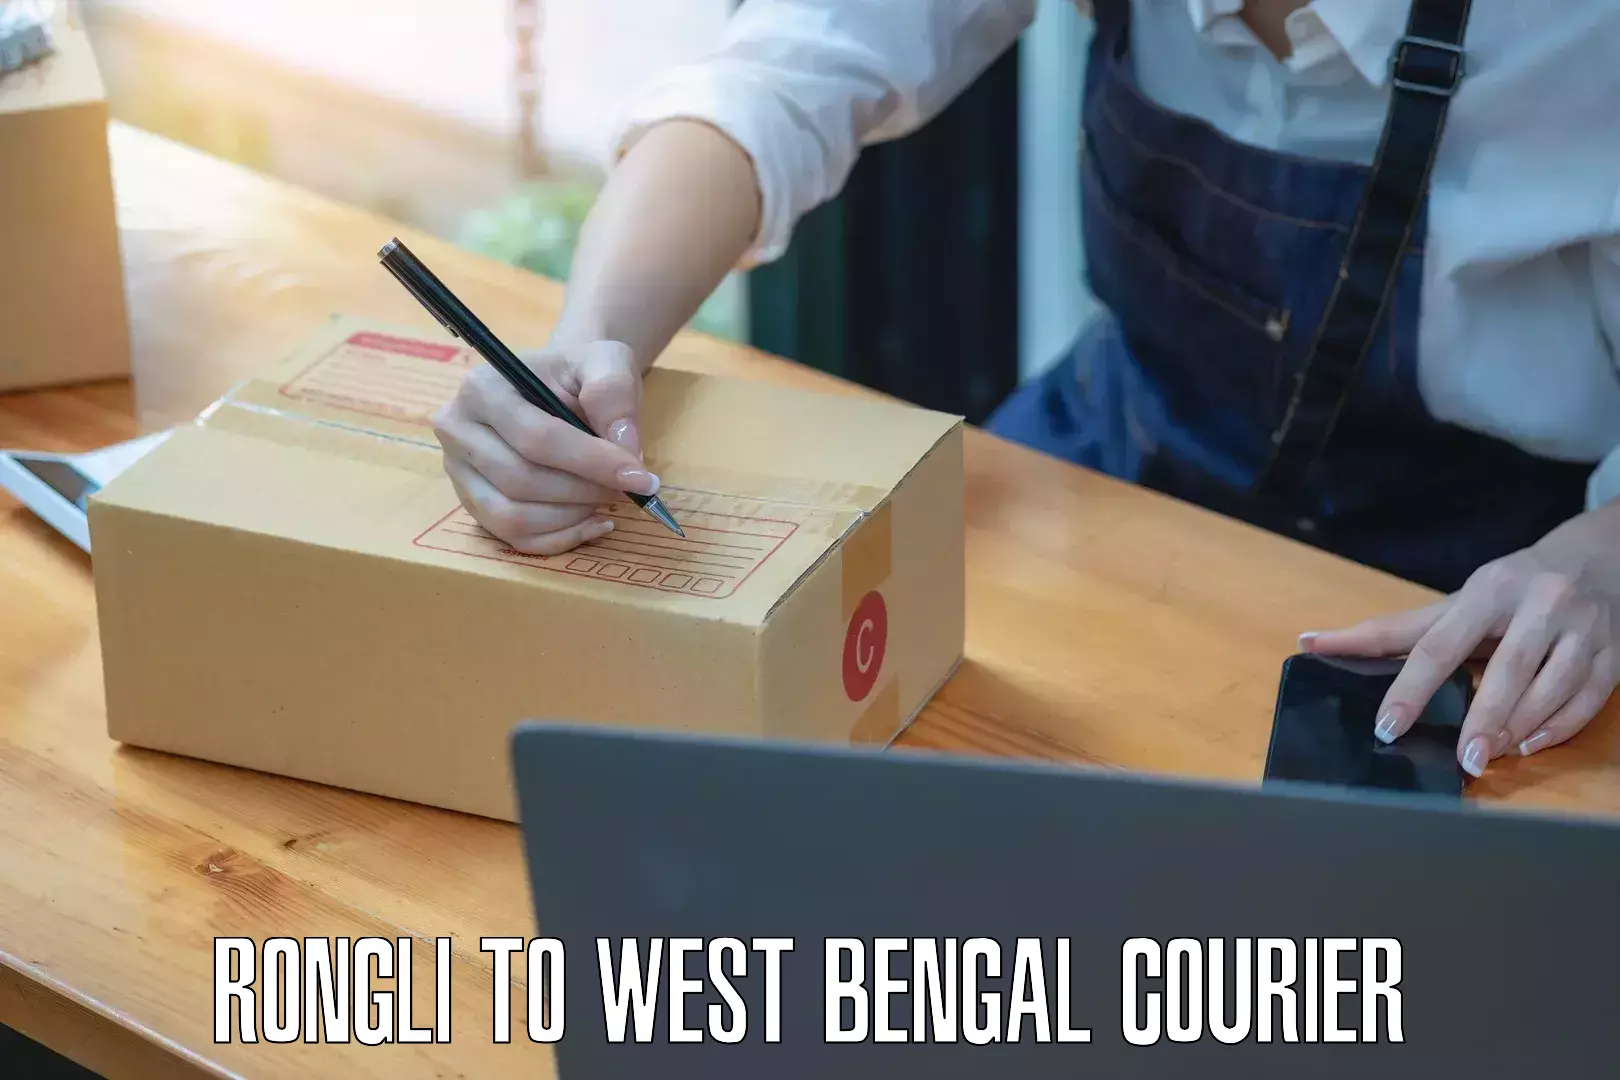 Bulk shipment Rongli to West Bengal